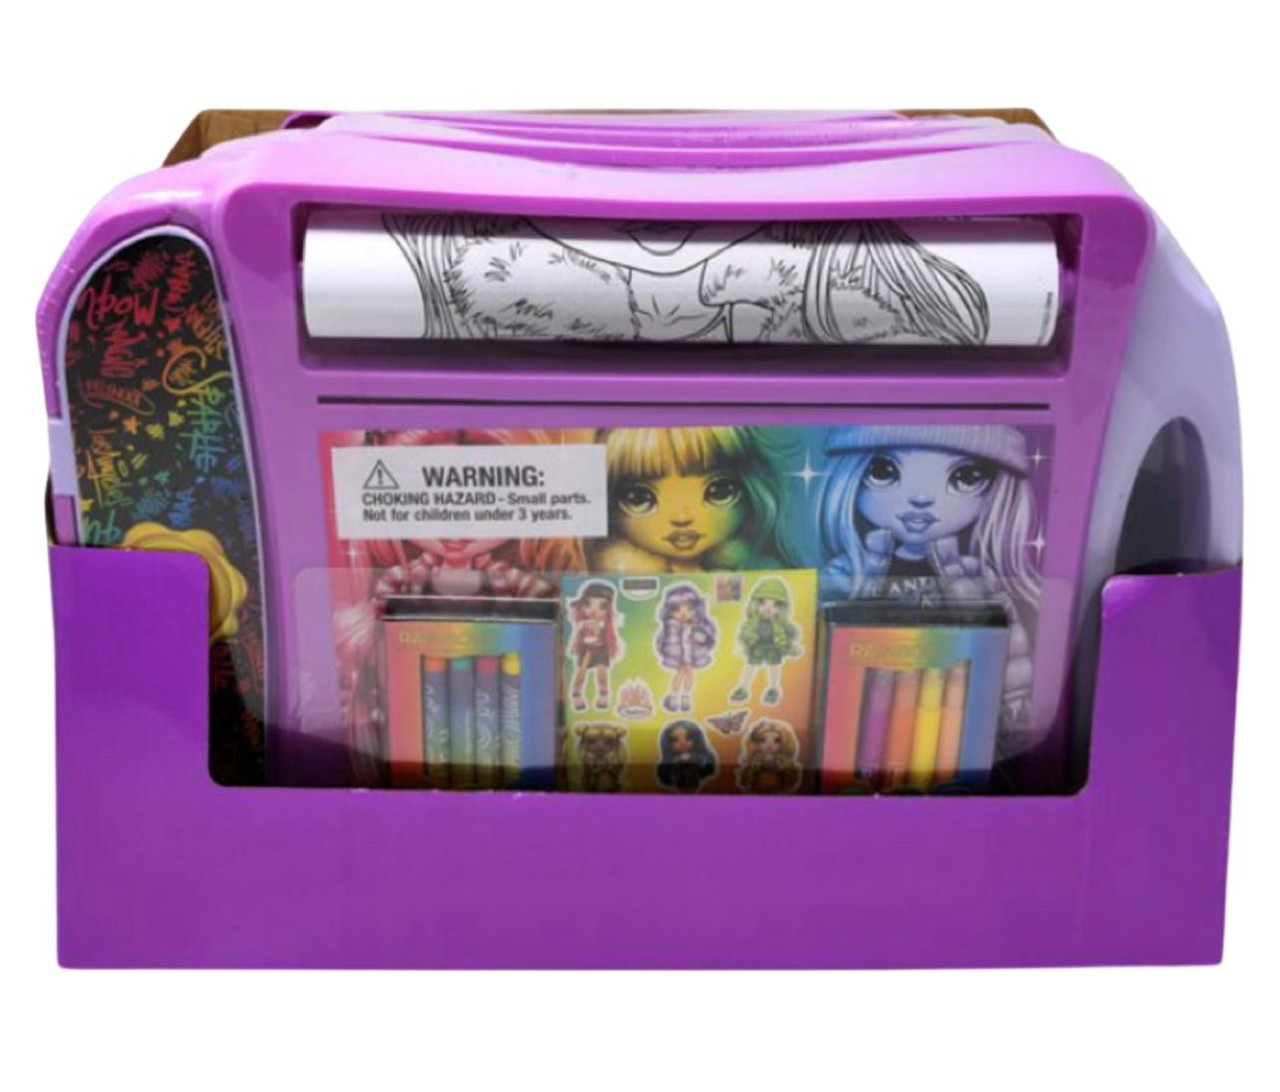 Rainbow High Ultimate Art Set, Kids Coloring & Painting Set, Reusable Storage Case